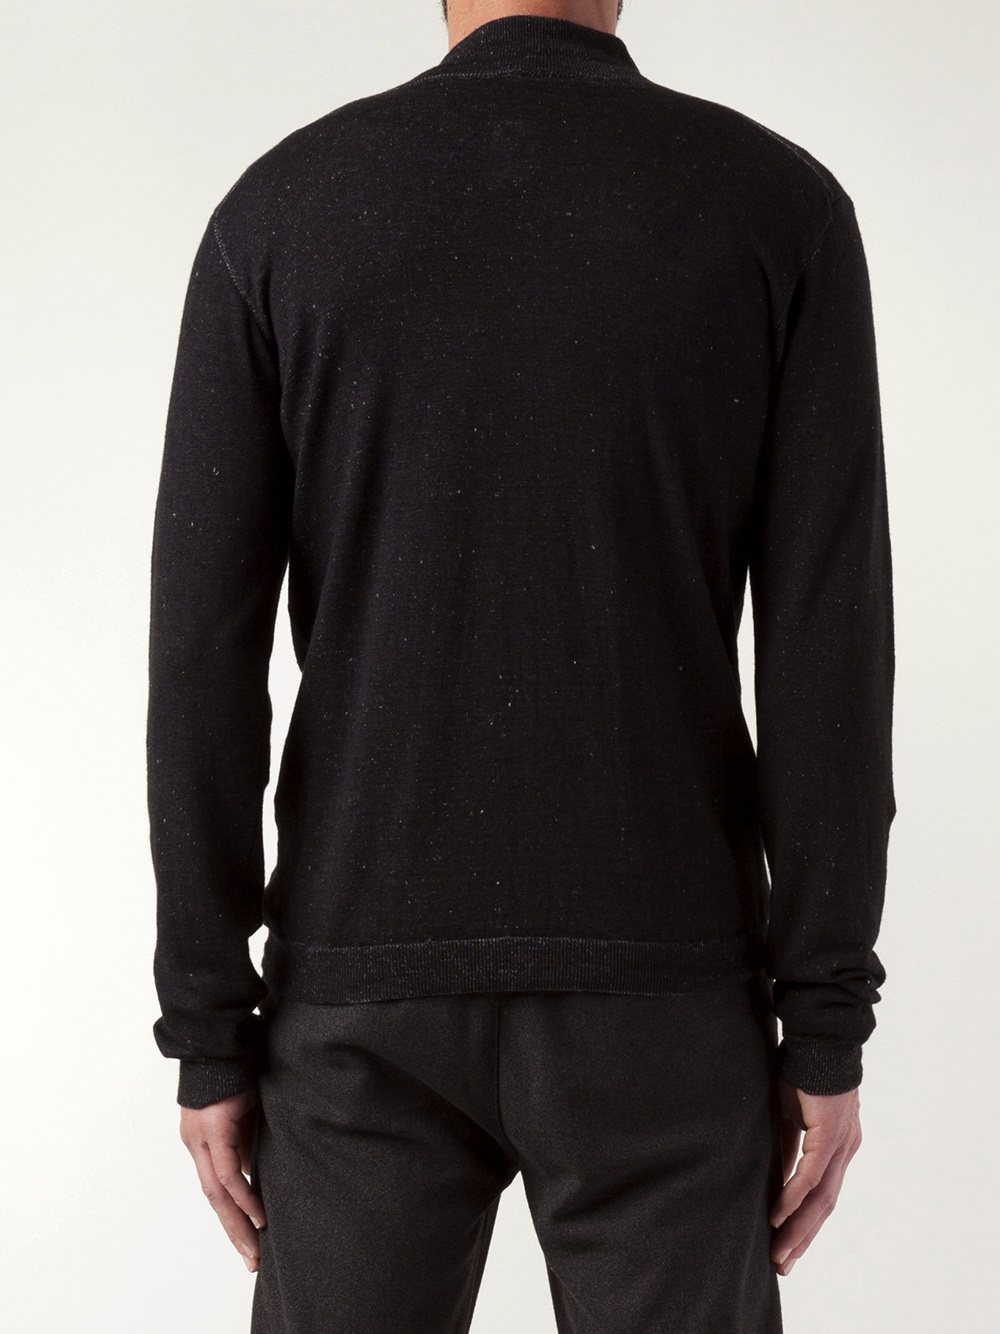 Lyst - Transit Uomo Zip Sweater in Black for Men